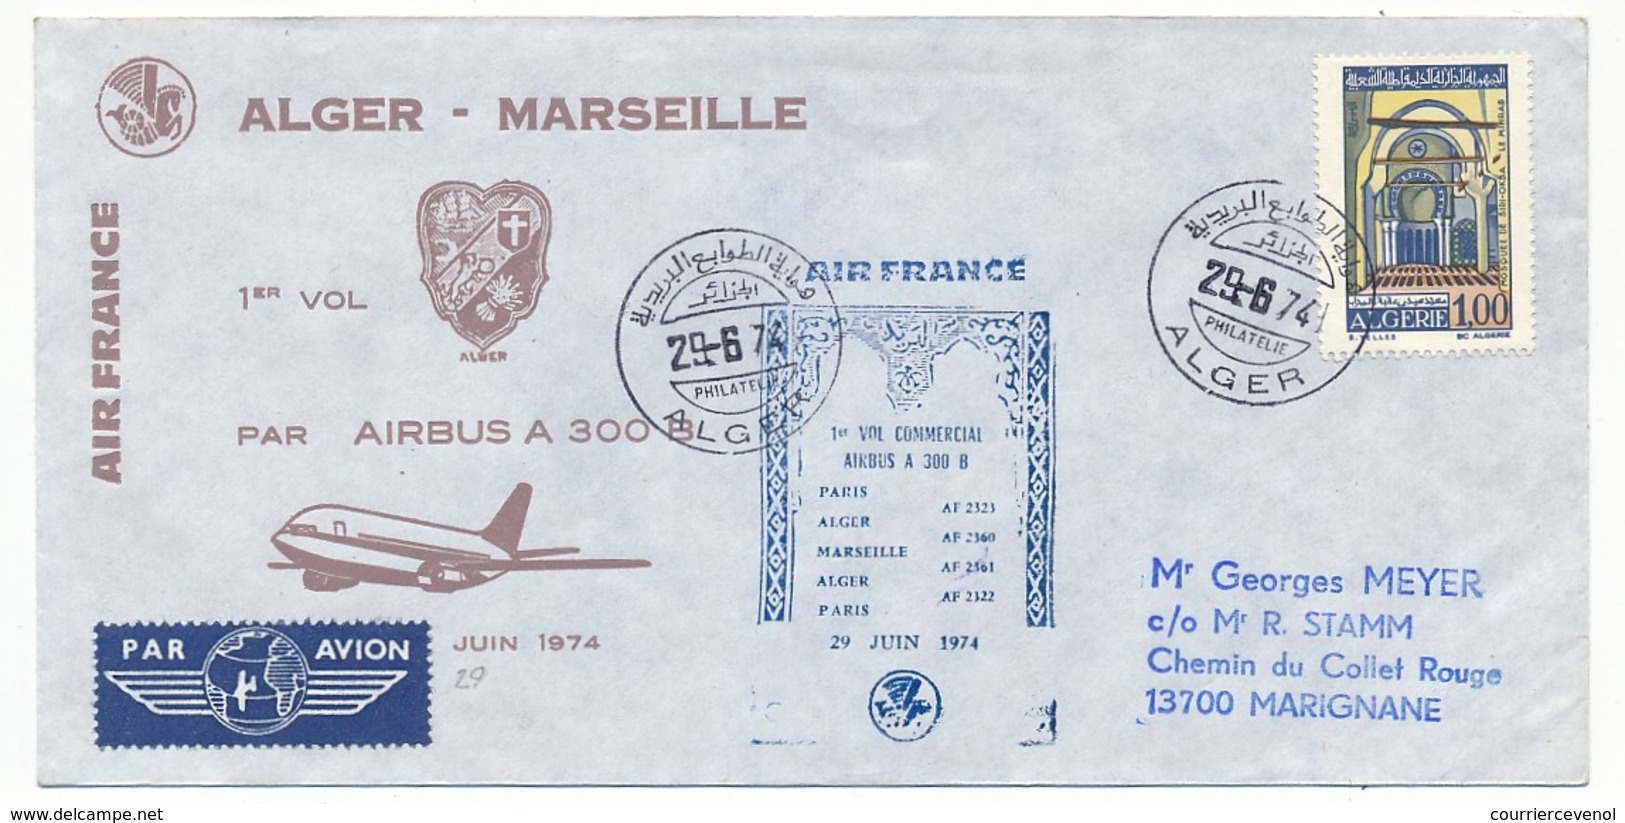 FRANCE - 2 Enveloppes - Marseille Alger (et Retour) Airbus 300B - 1974 - First Flight Covers